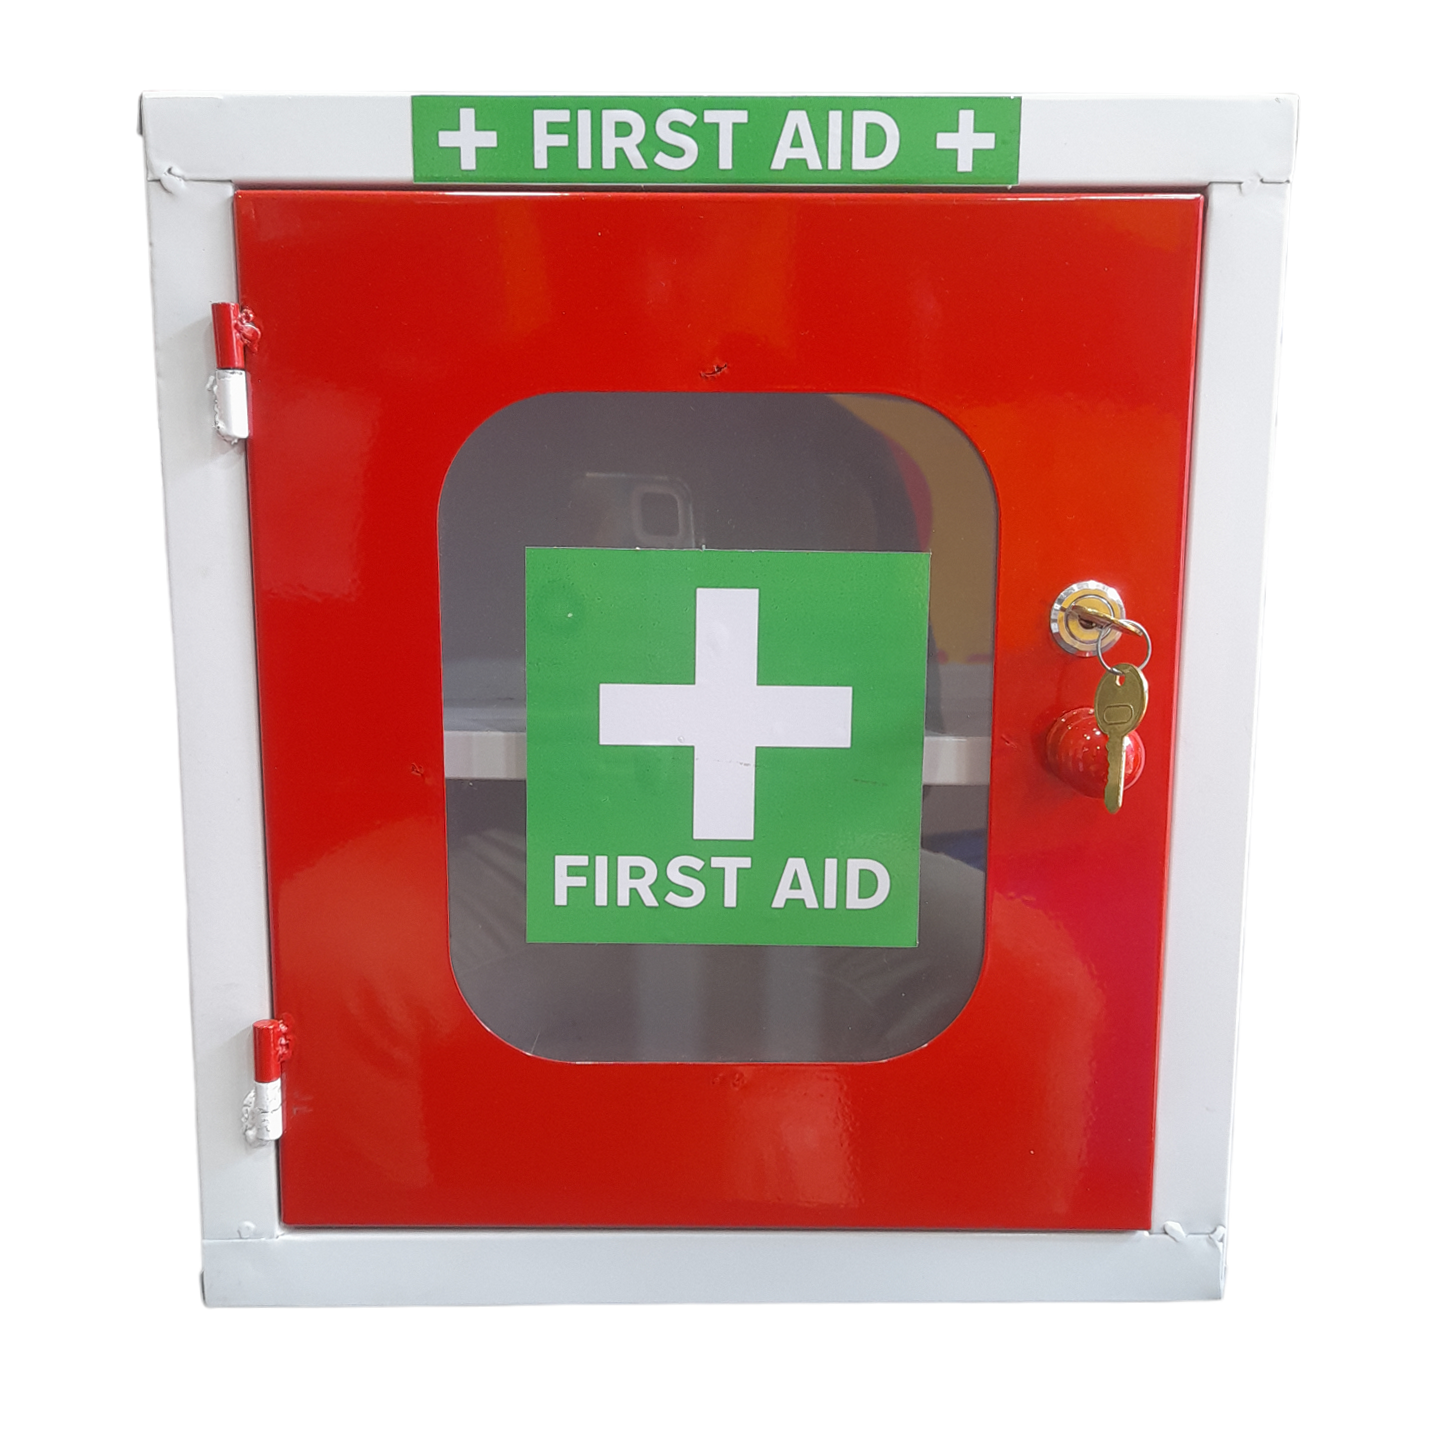 First aid box (Empty)